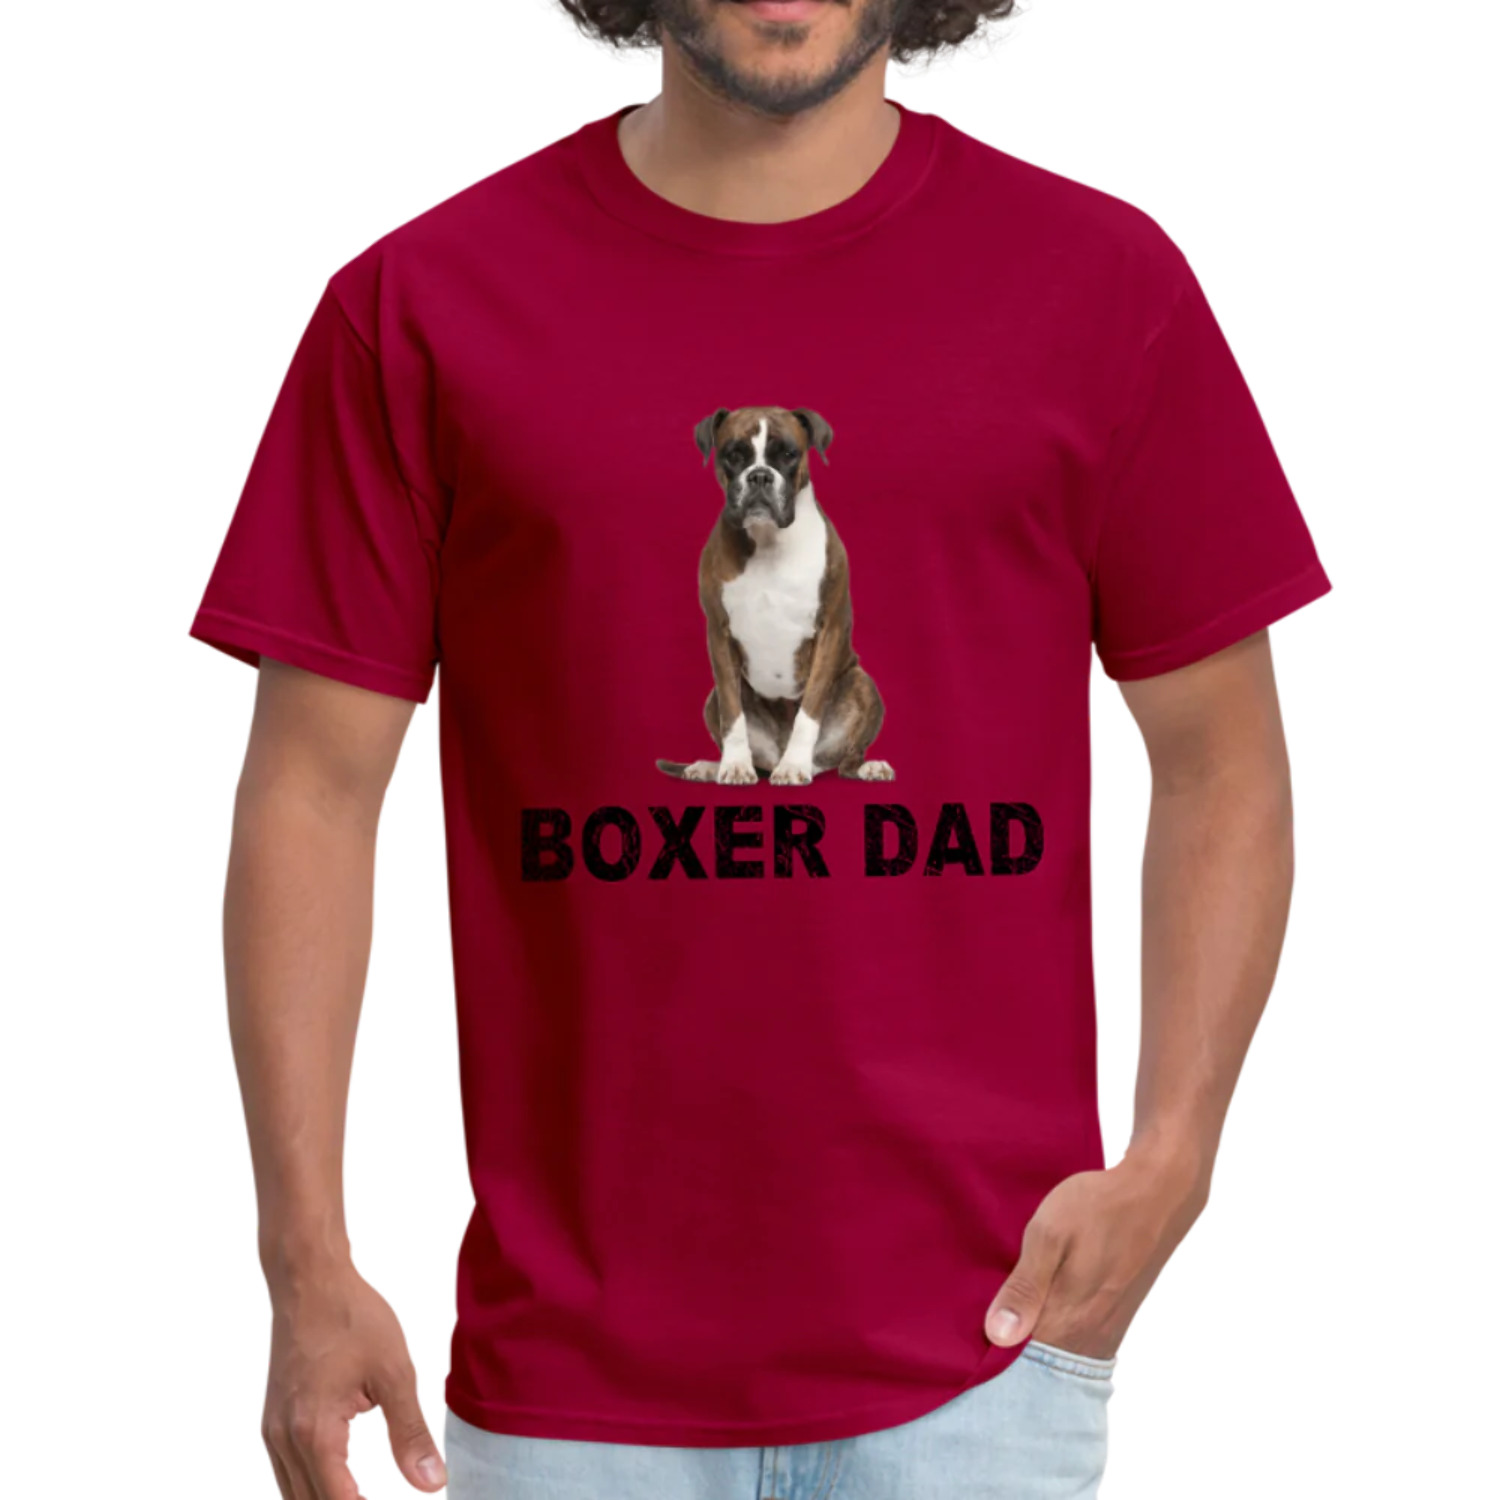 Boxer Dad Shirt, Dog Dad TShirt, Gift For Dog Lover, Dog Tshirt, Gift for Boxer Dad, Dog Papa Tee, Dog Dad Gift, Boxer Lover Shirt - image 1 of 11